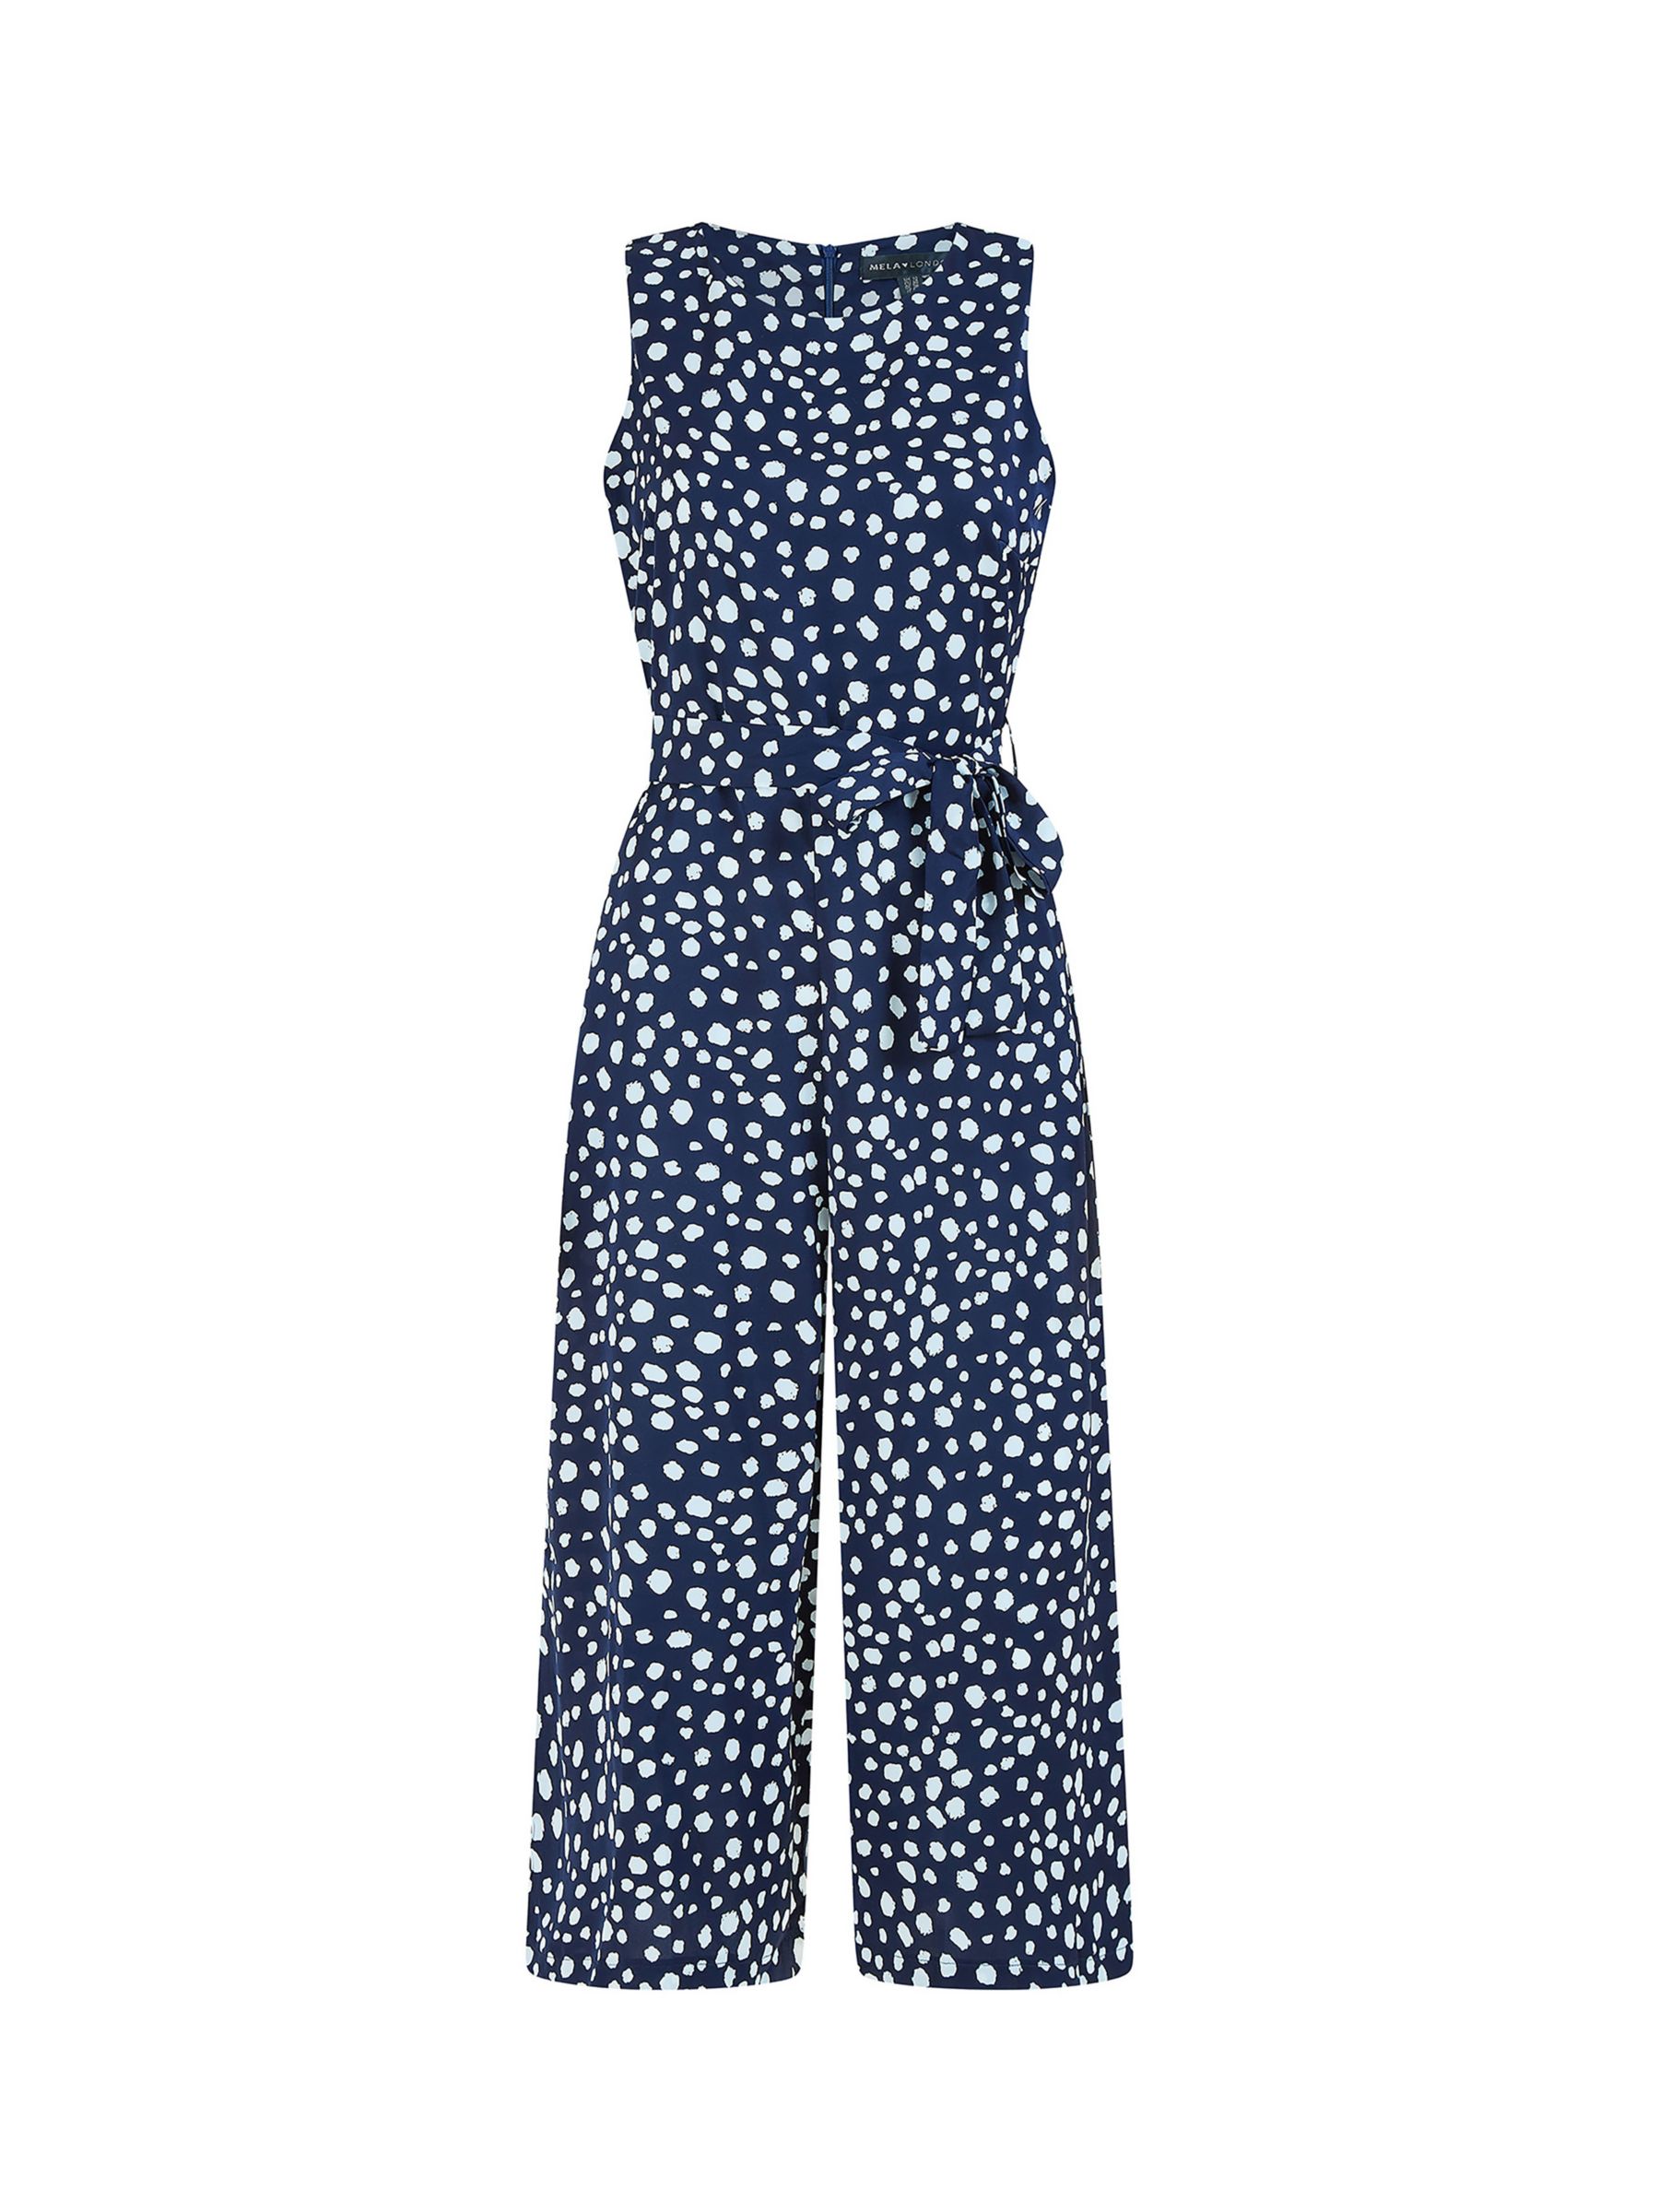 Buy Mela London Blotch Print Culotte Jumpsuit, Navy Online at johnlewis.com